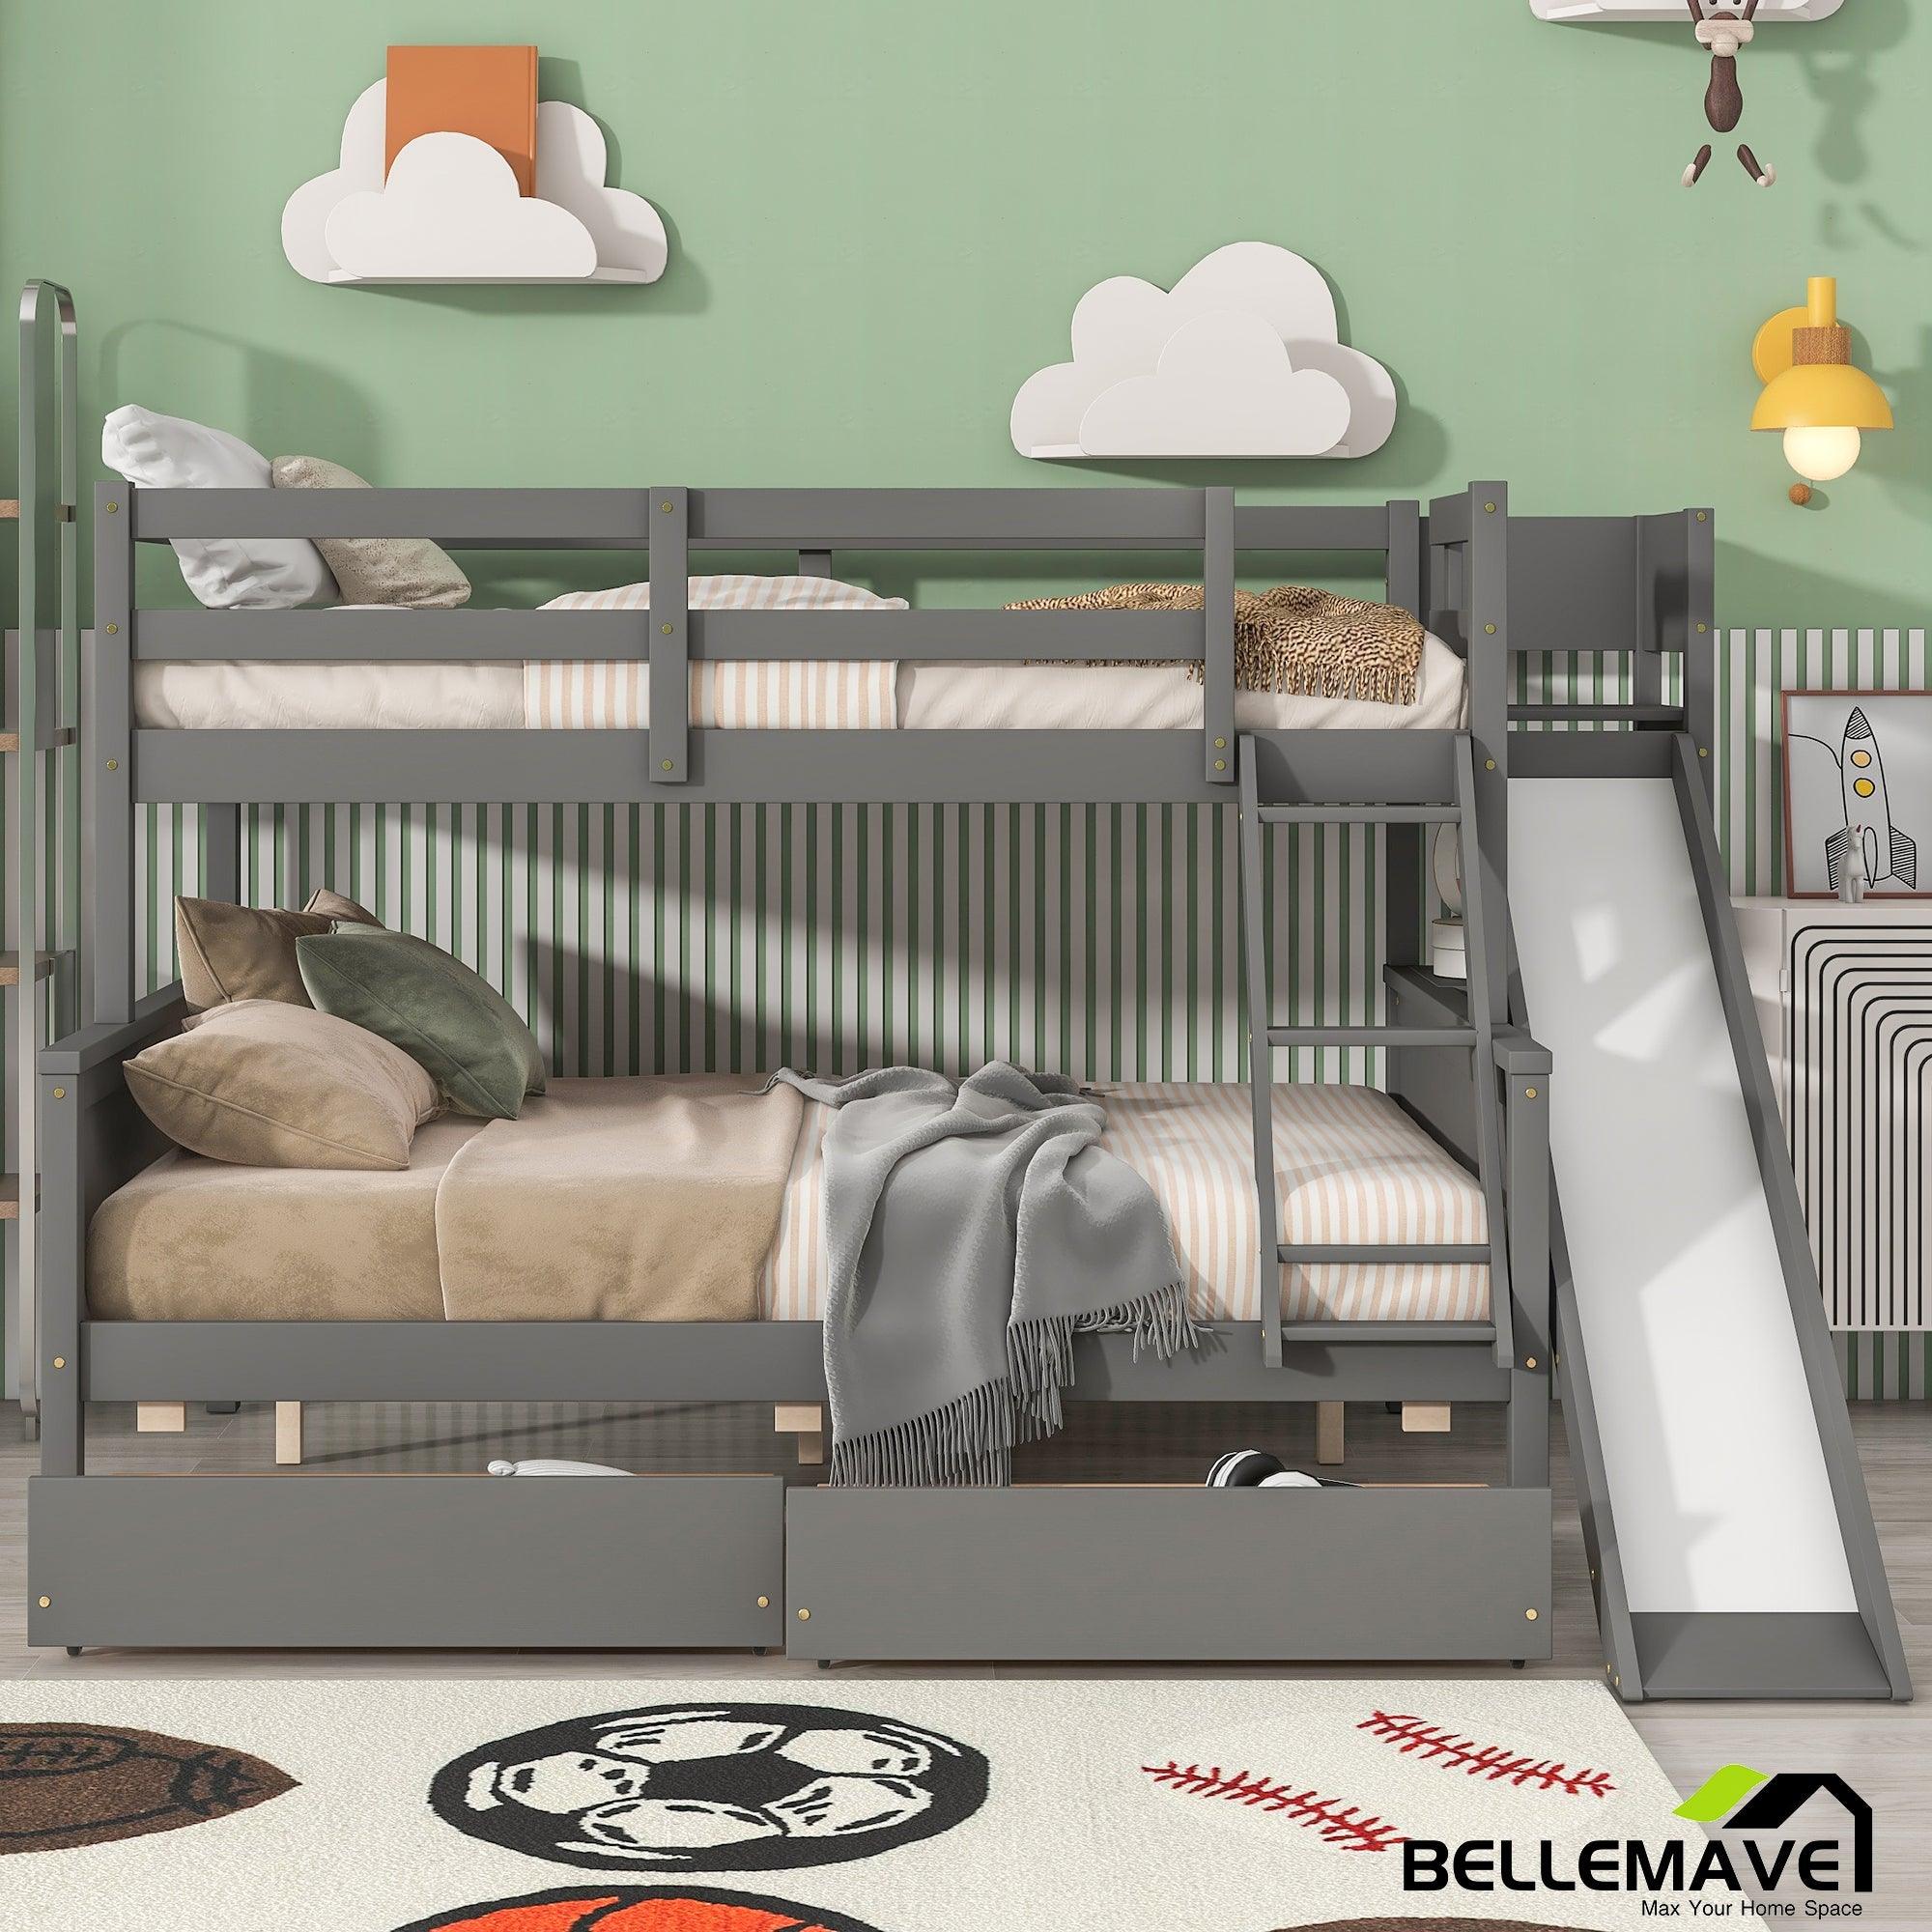 Bellemave Twin over Full Bunk Bed - Bellemave